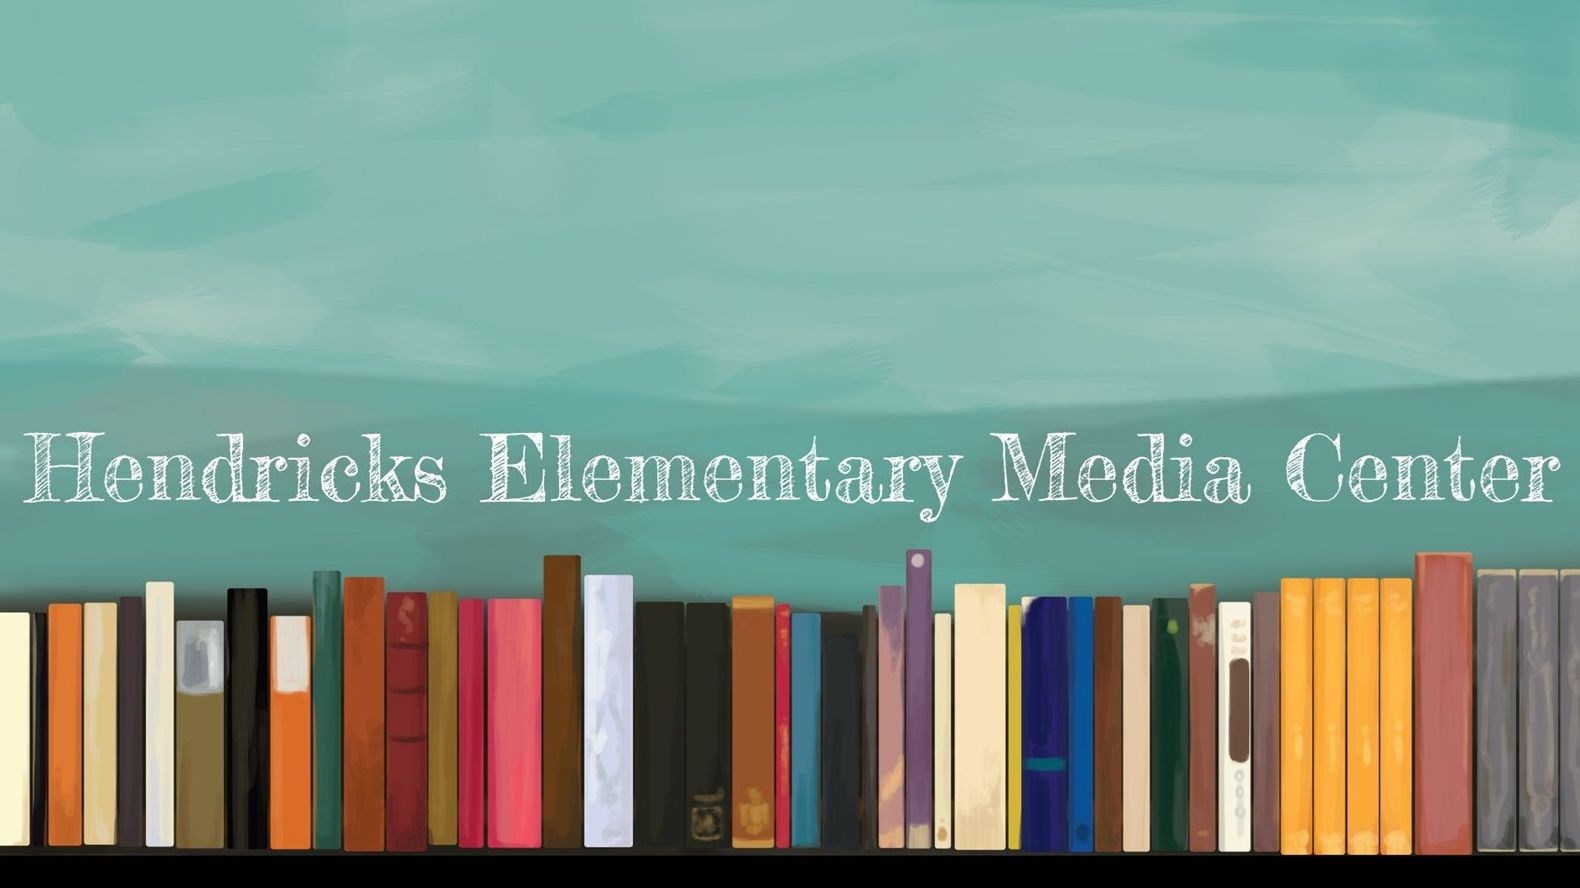 row of books on green background with lettering reading Hendricks Elementary Media Center